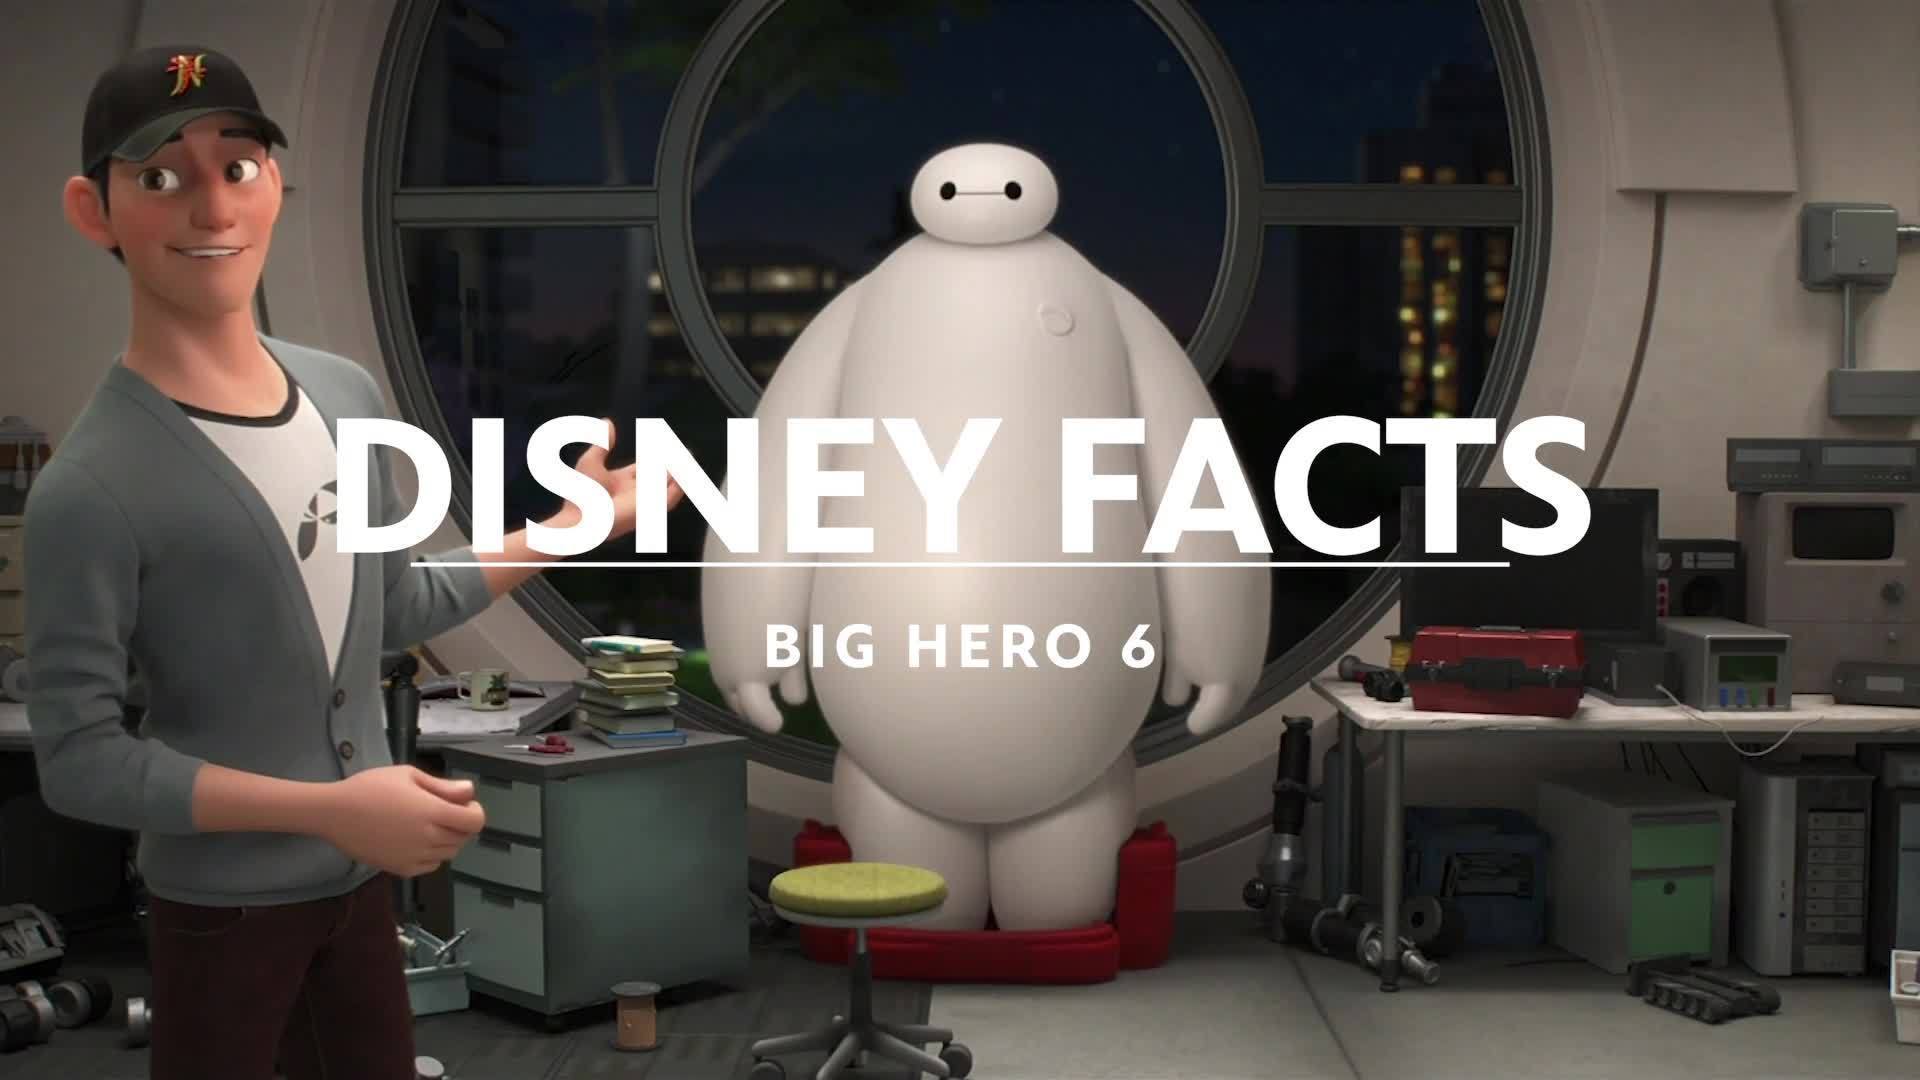 Big Hero 6 Secrets & Easter Eggs | Disney Facts by Disney